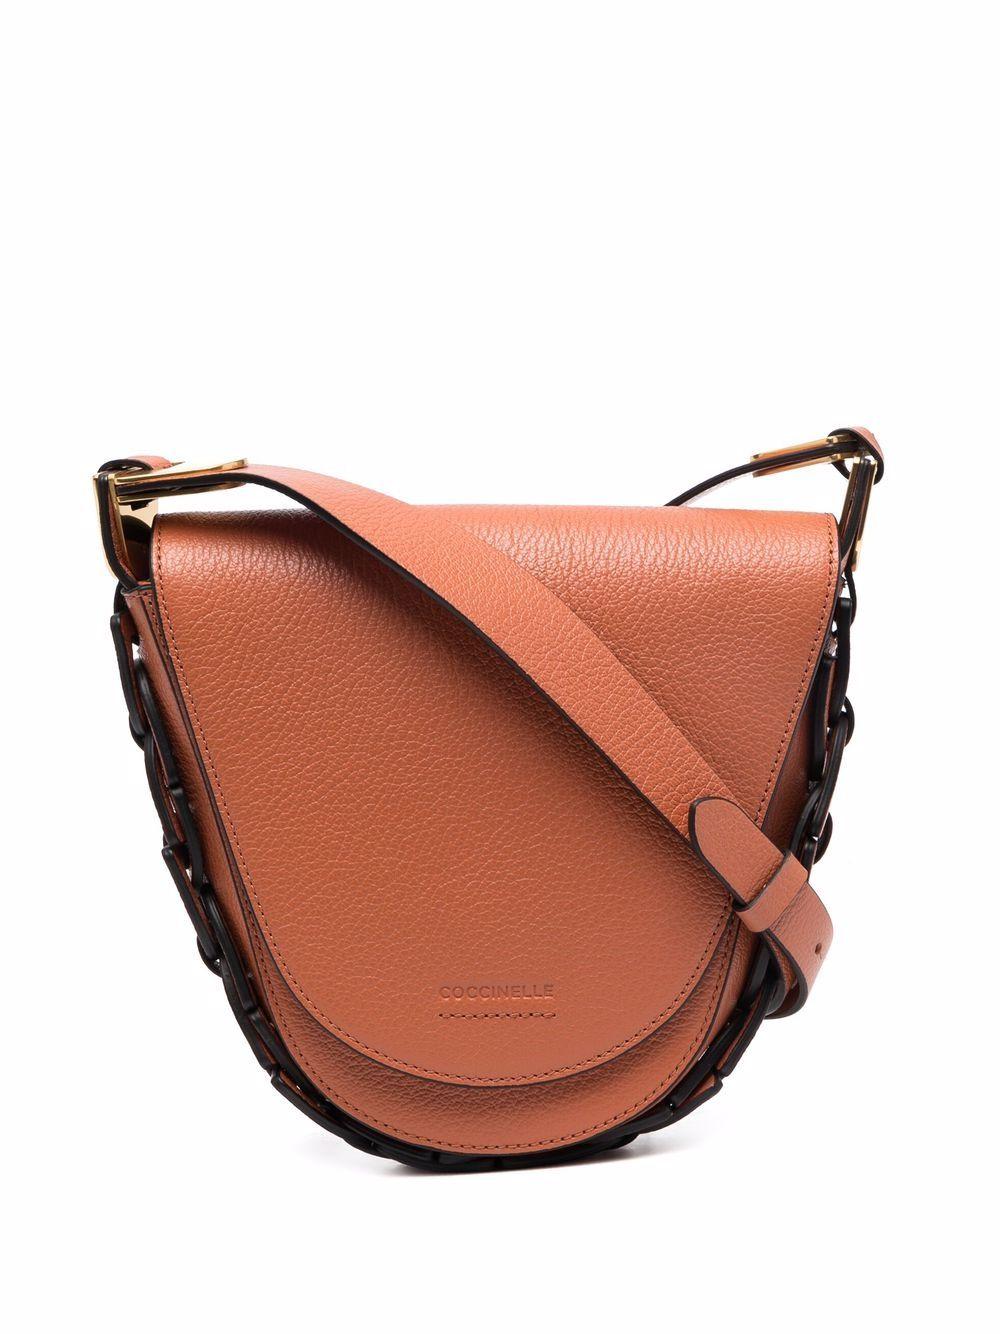 Coccinelle Josephine Leather Crossbody Bag in Brown - arisaprinter.com